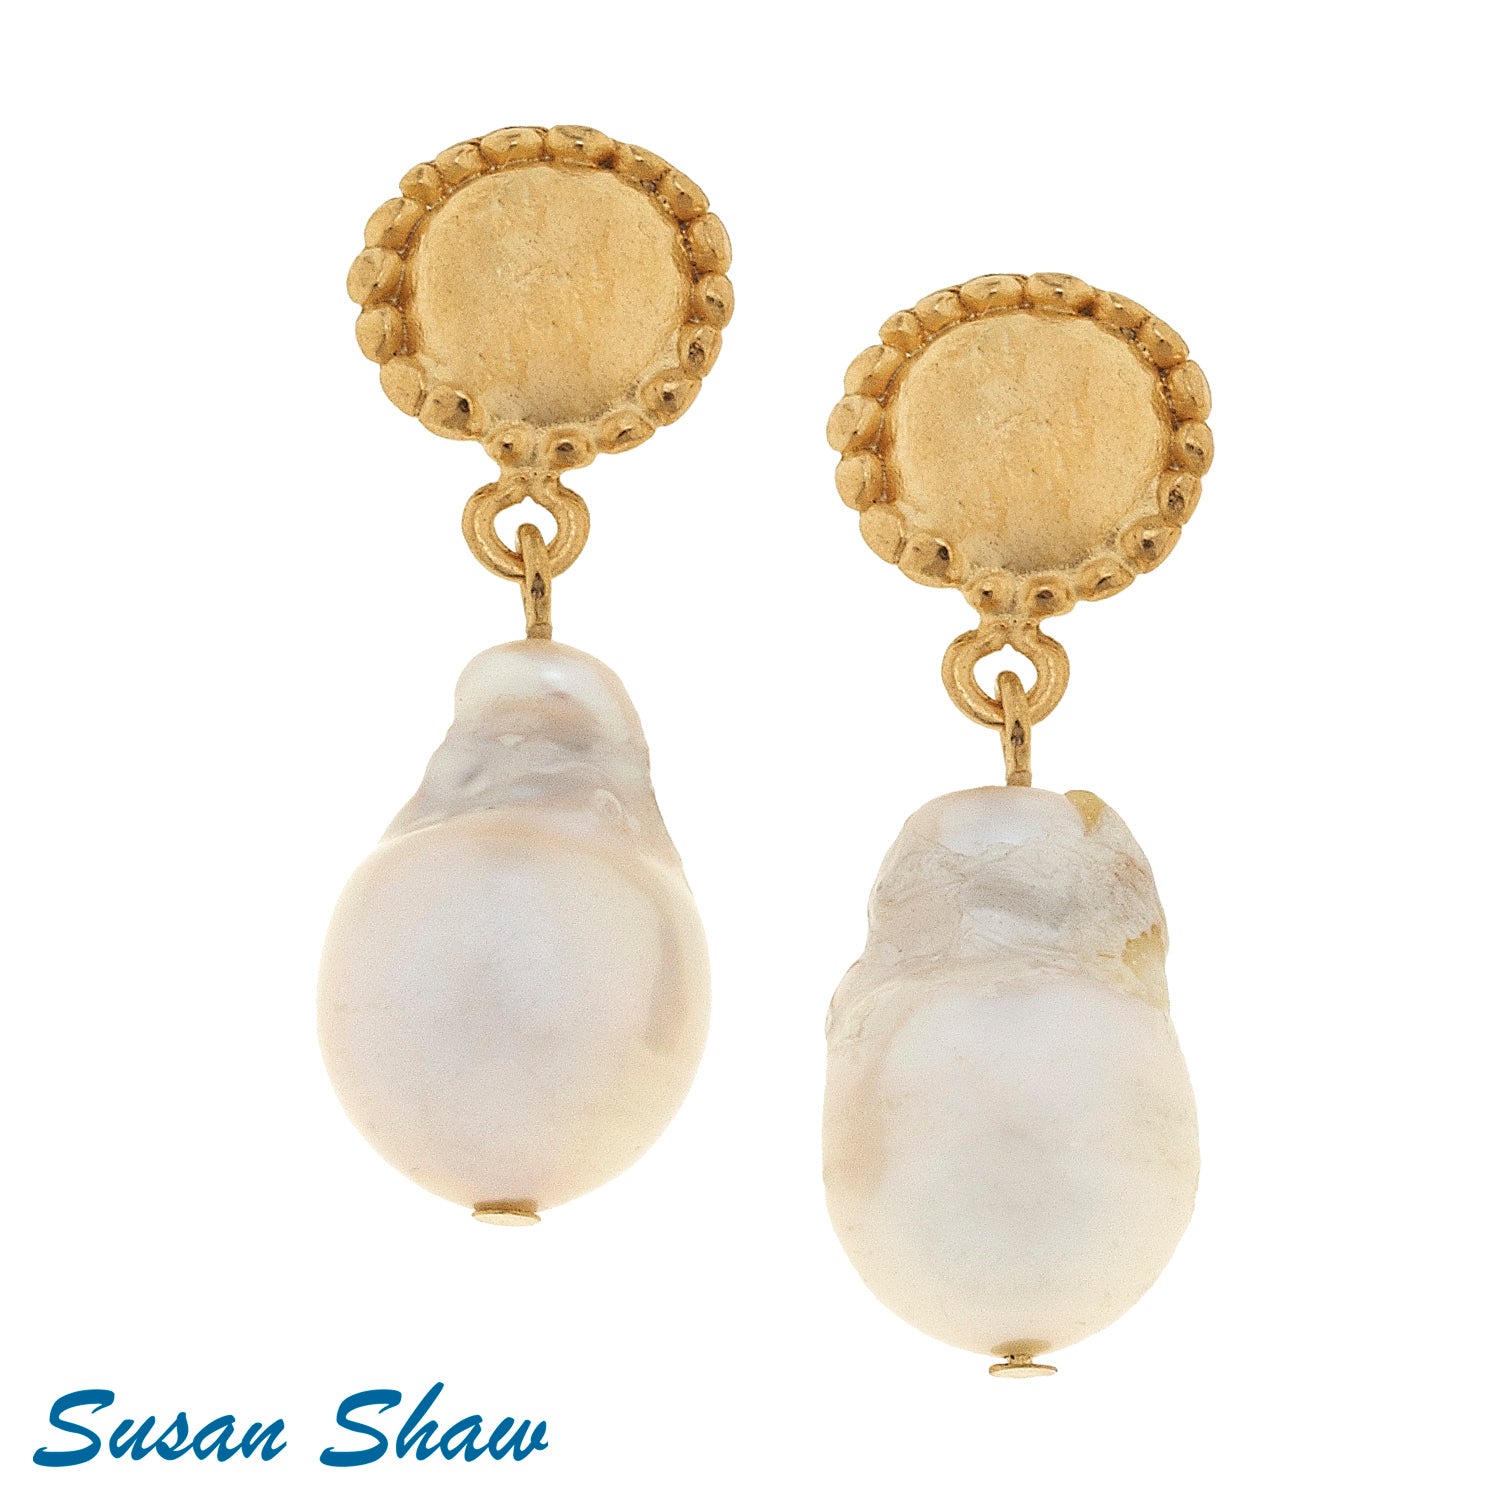 Susan Shaw Genuine Large Baroque Freshwater Pearl Earrings